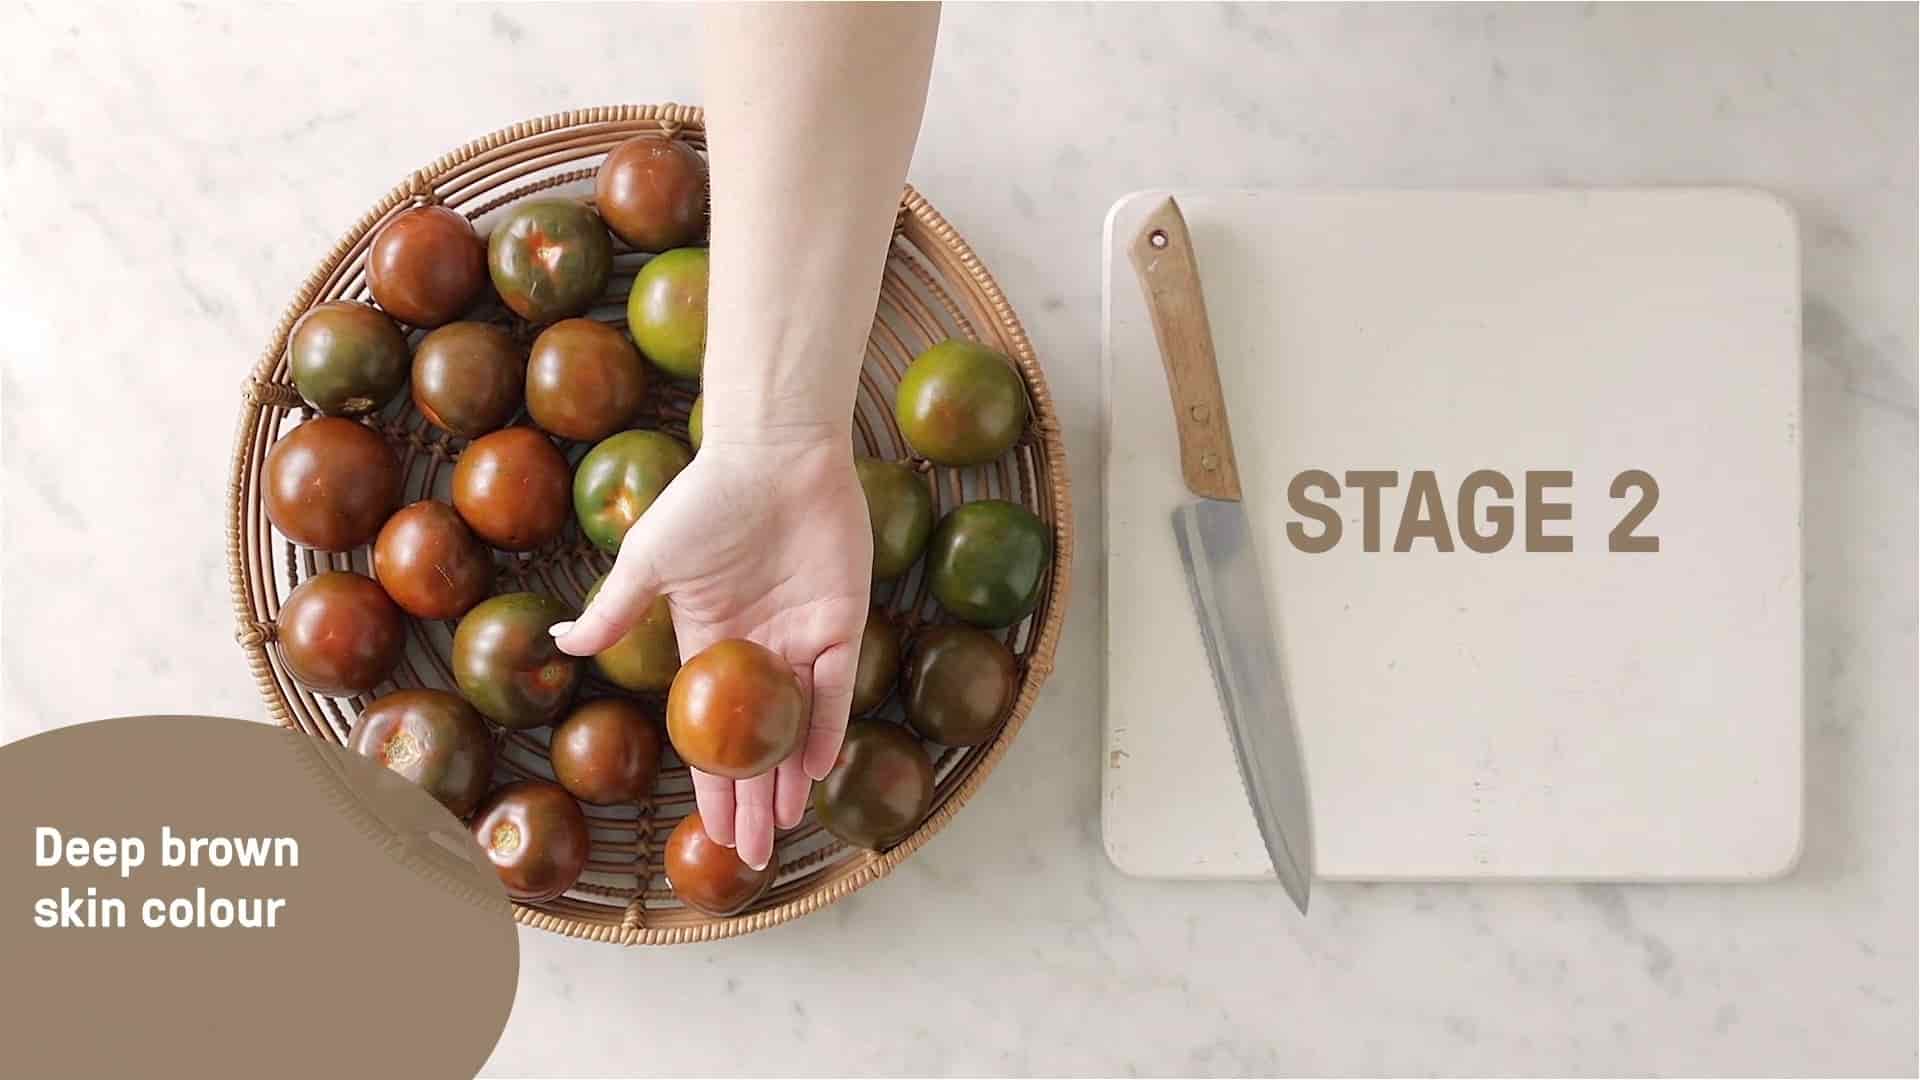 A hand holding a brown kumato tomato over a basket of kumatoes.